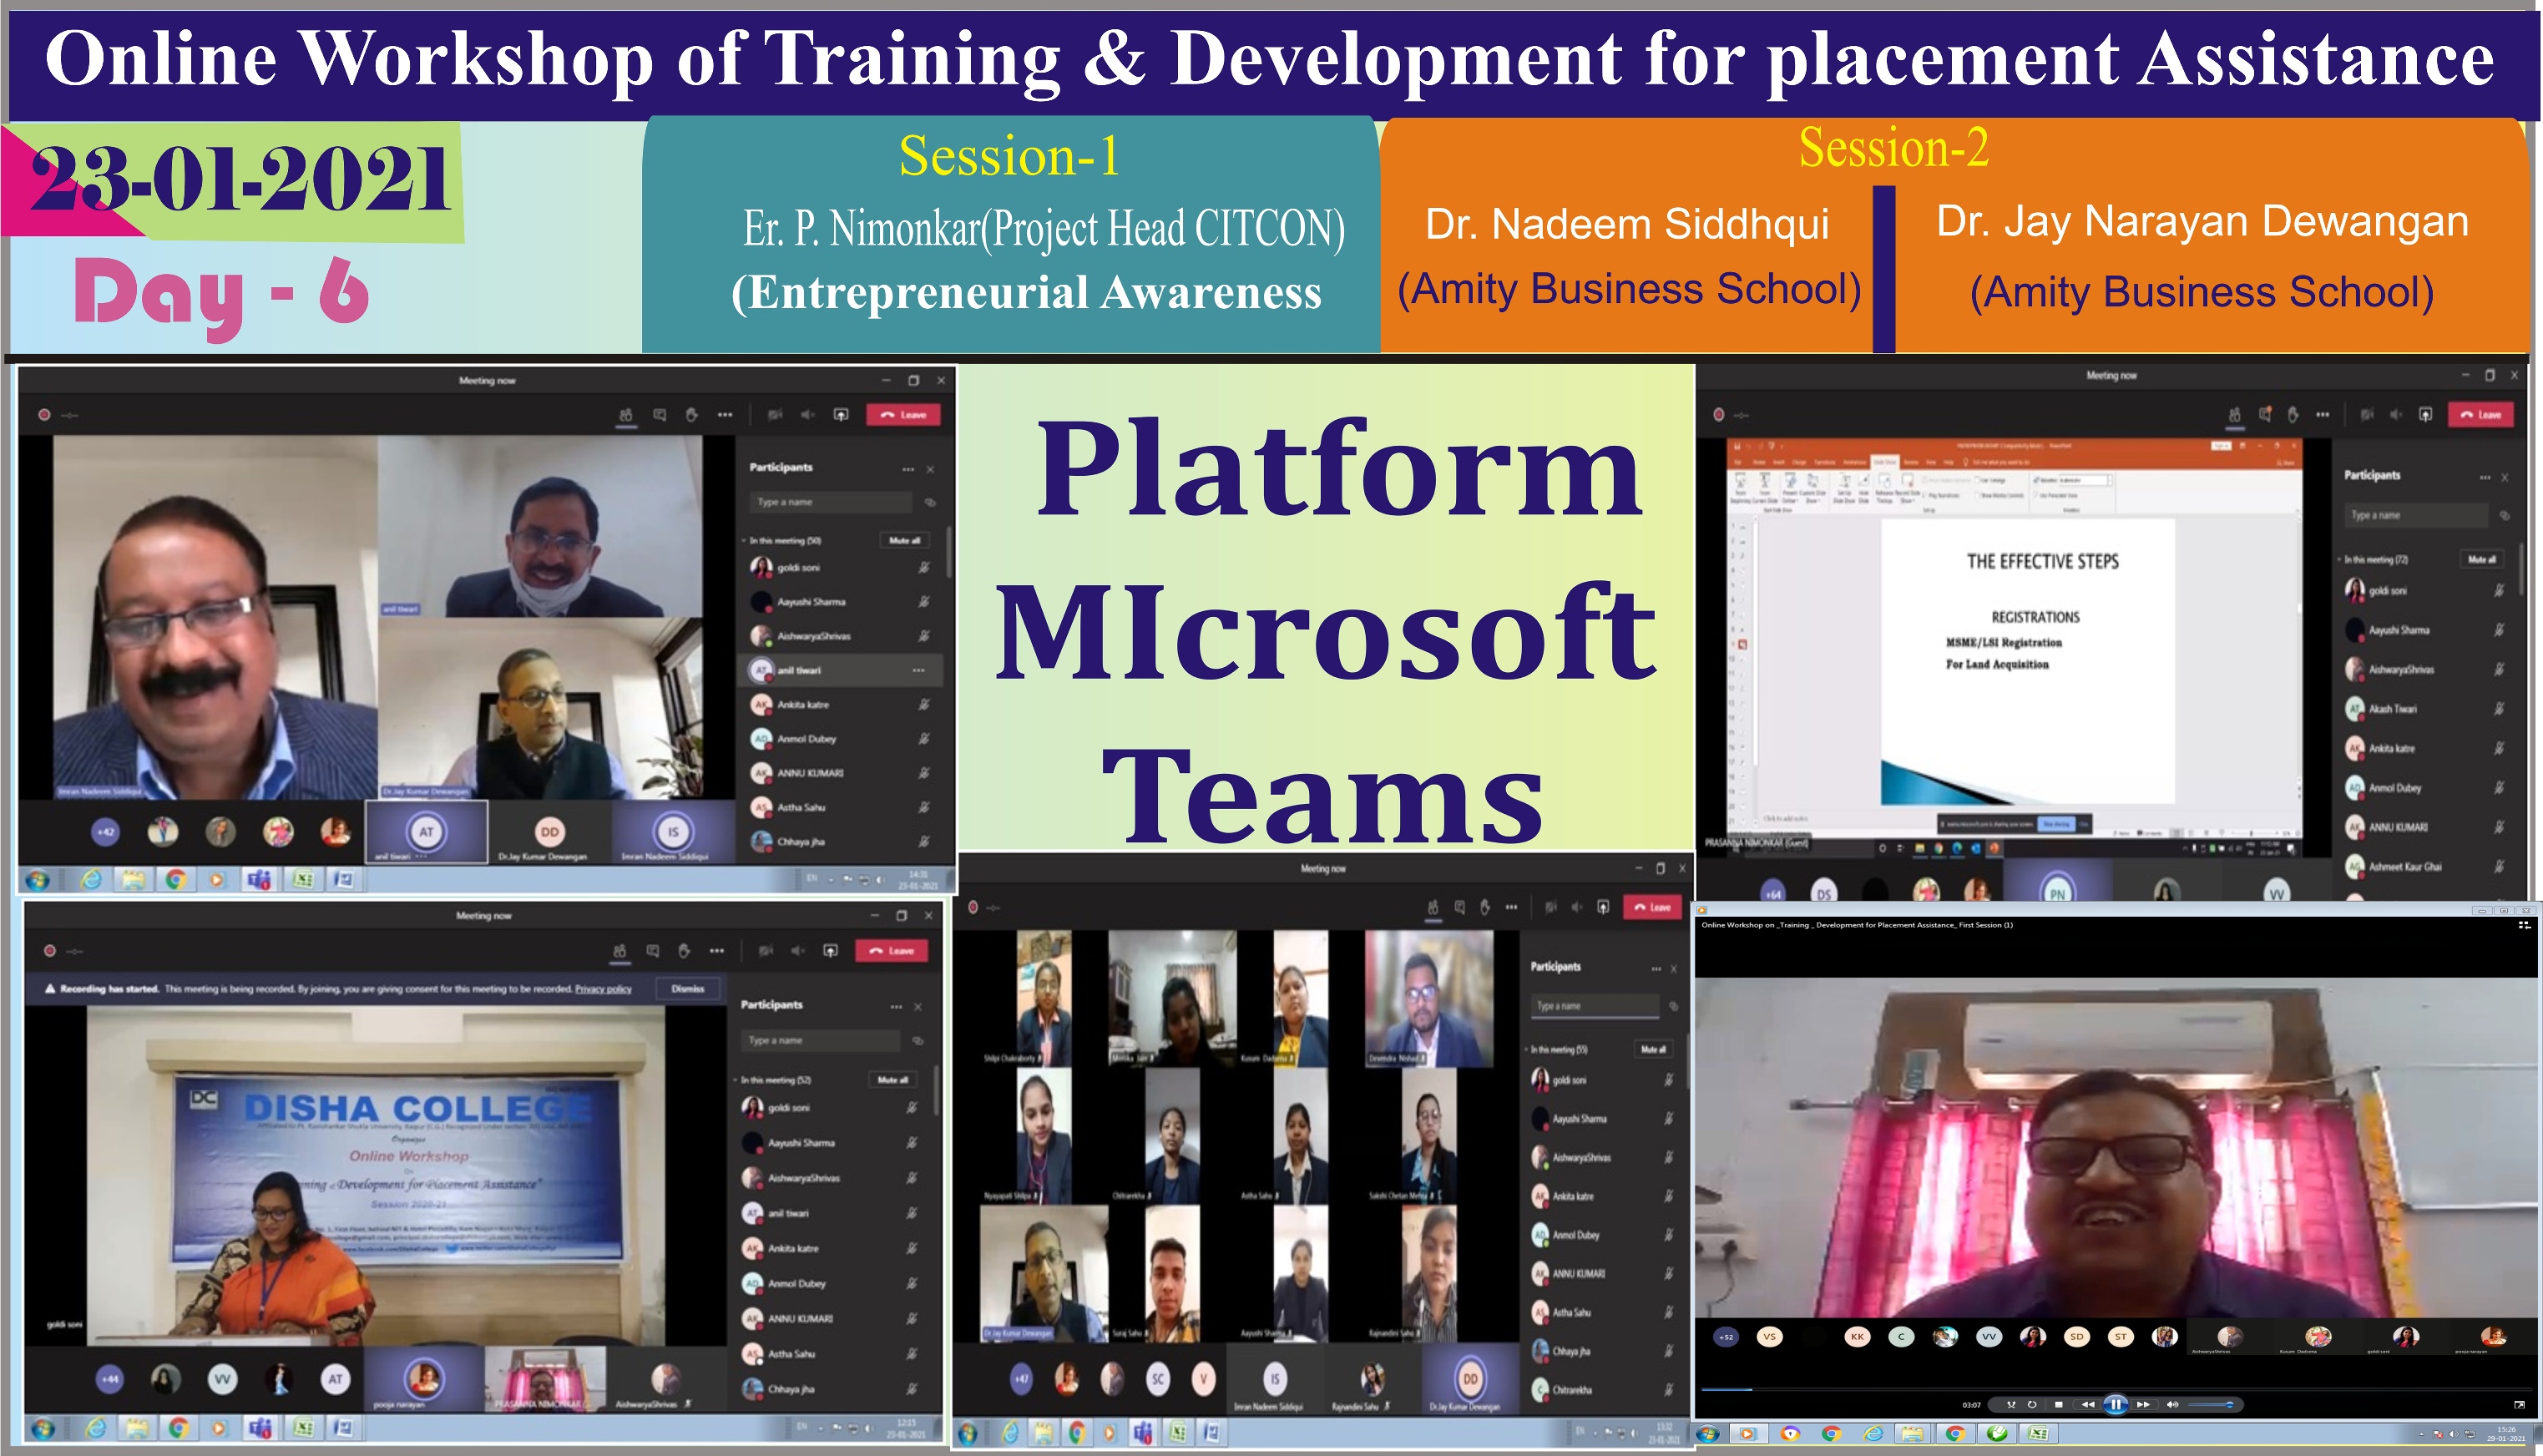 Online Workshop of Training & Development for Placement Assistance Program Day-6